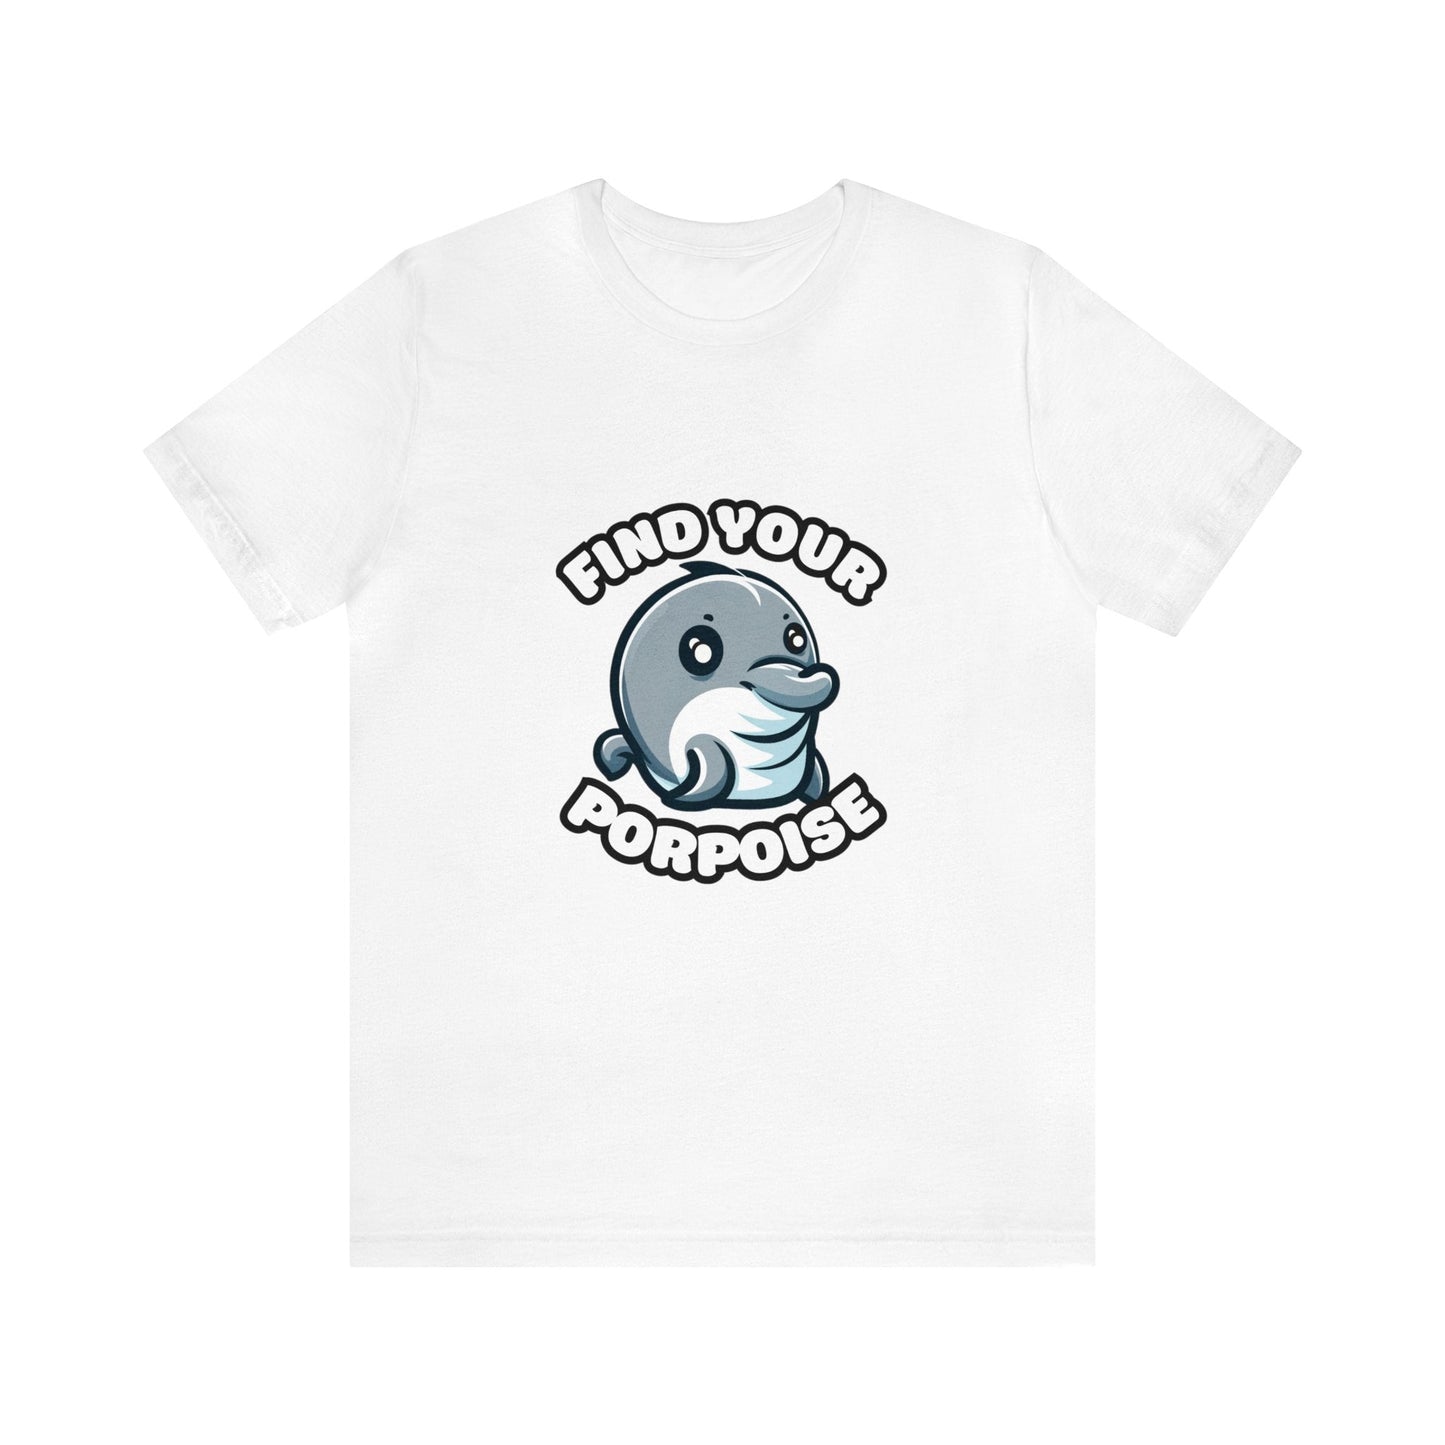 US - Find Your Porpoise - Porpoise T-shirt White / S